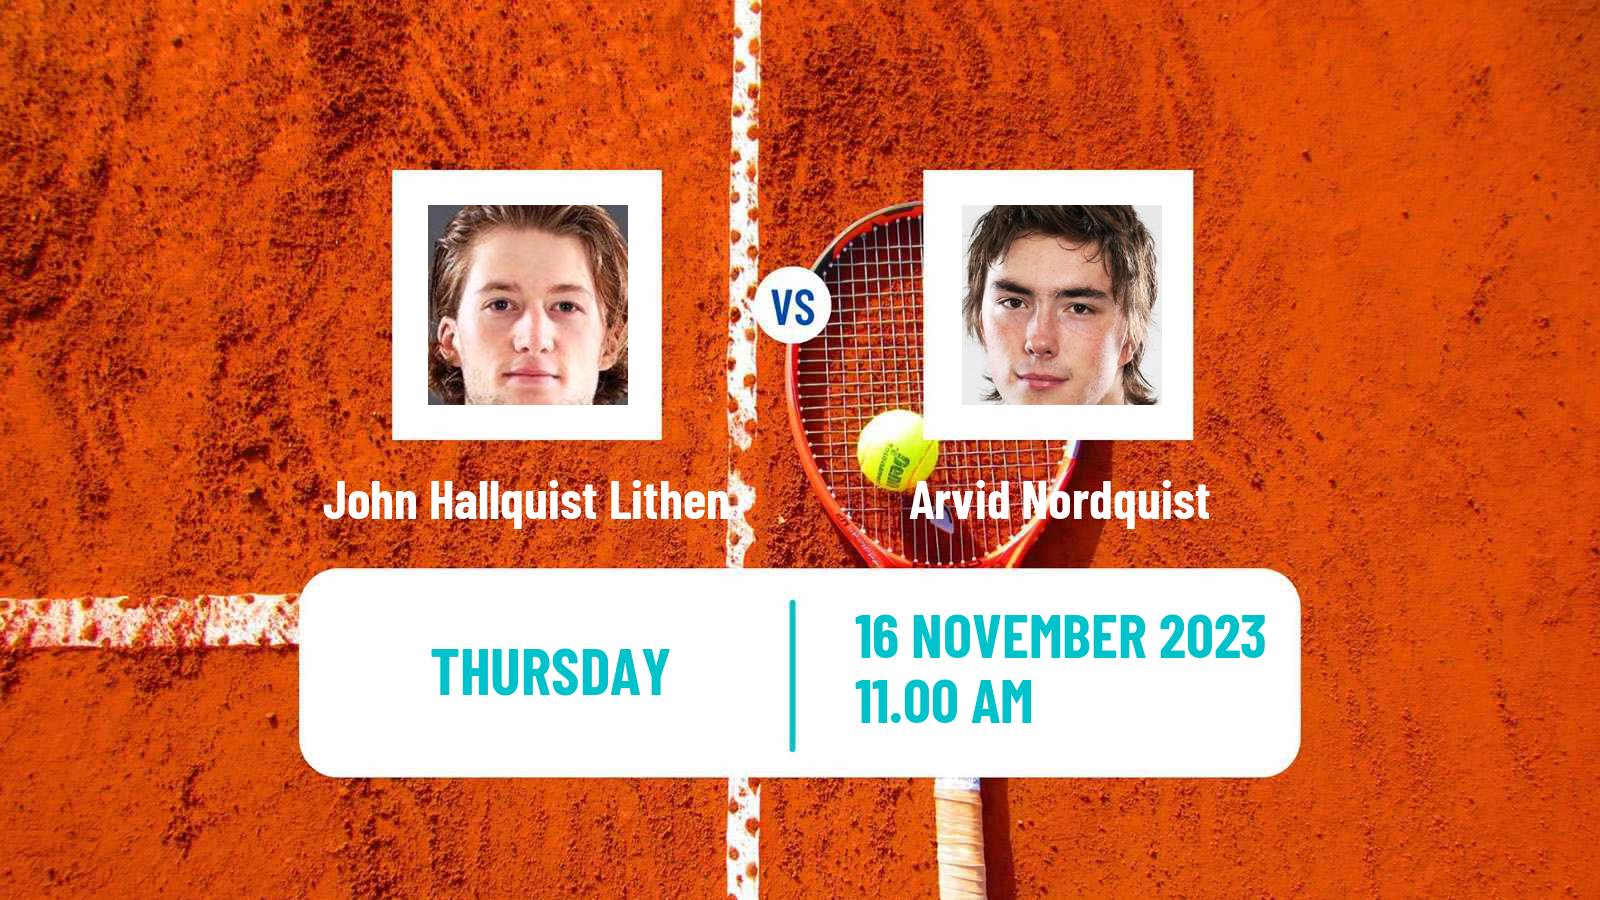 Tennis ITF M15 Boca Raton Fl Men John Hallquist Lithen - Arvid Nordquist